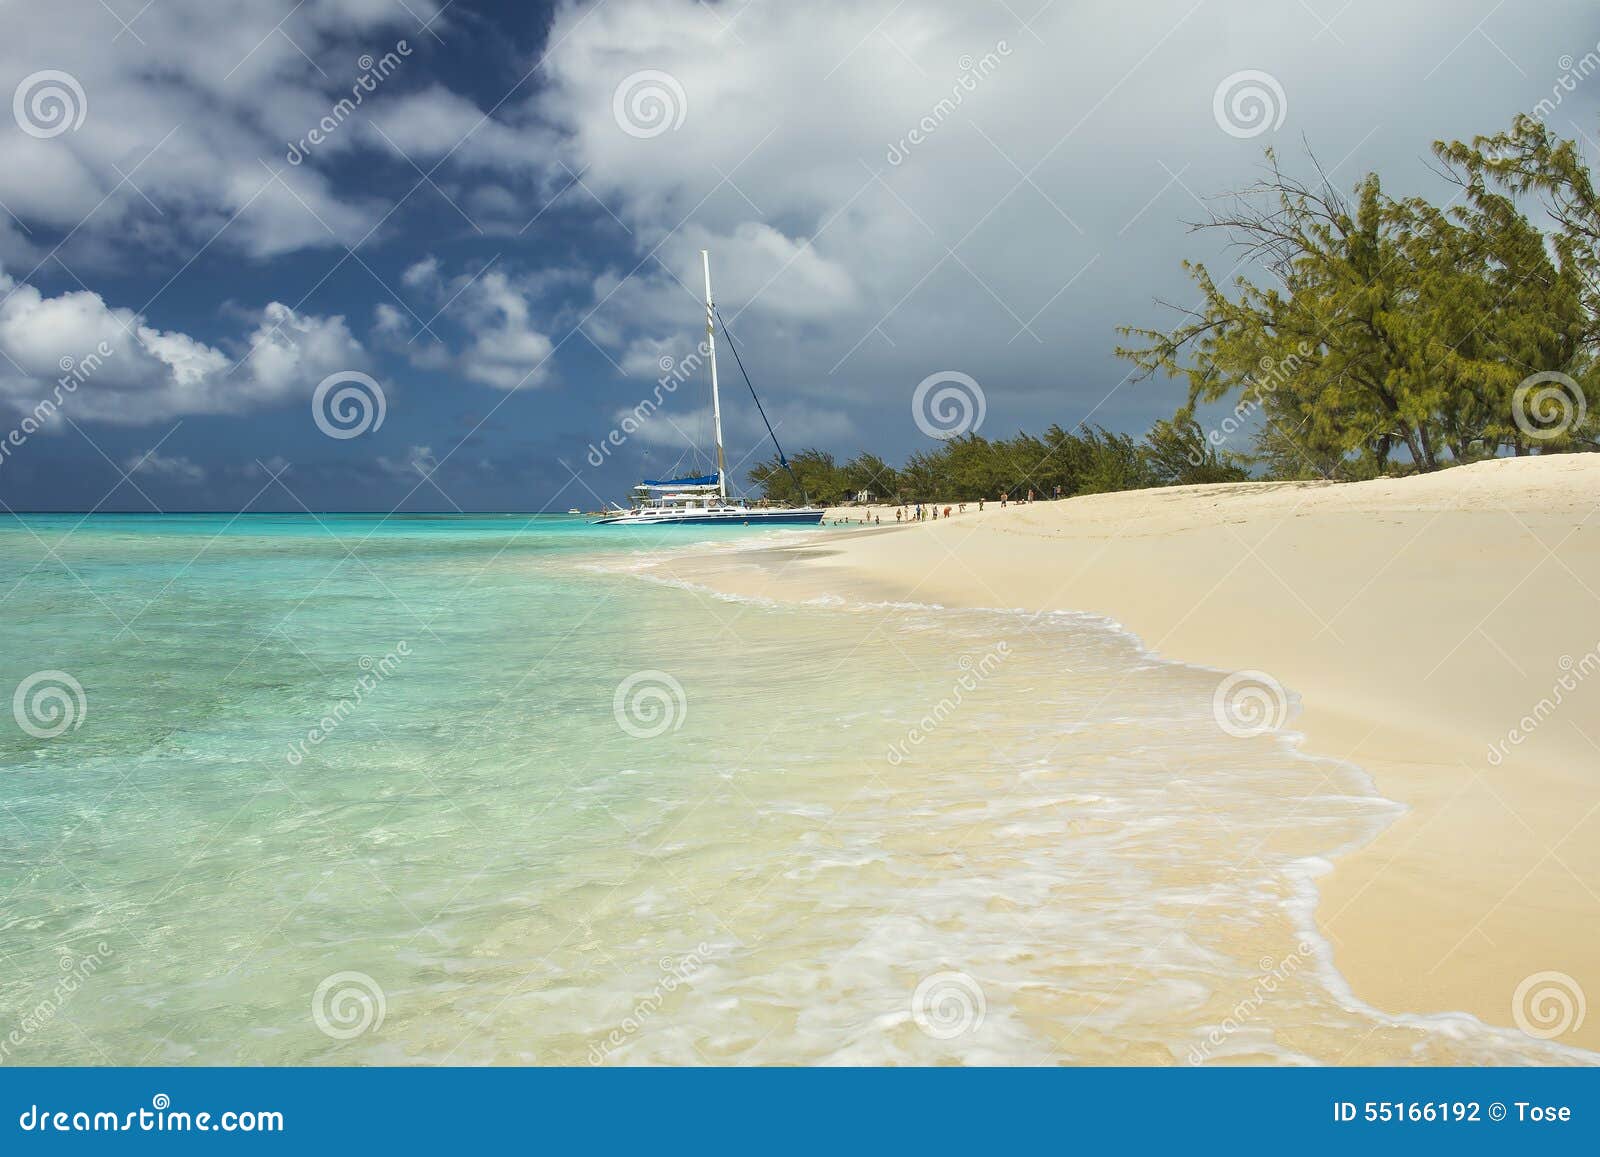 governor's beach, grand turk, turks and caicos, caribbean